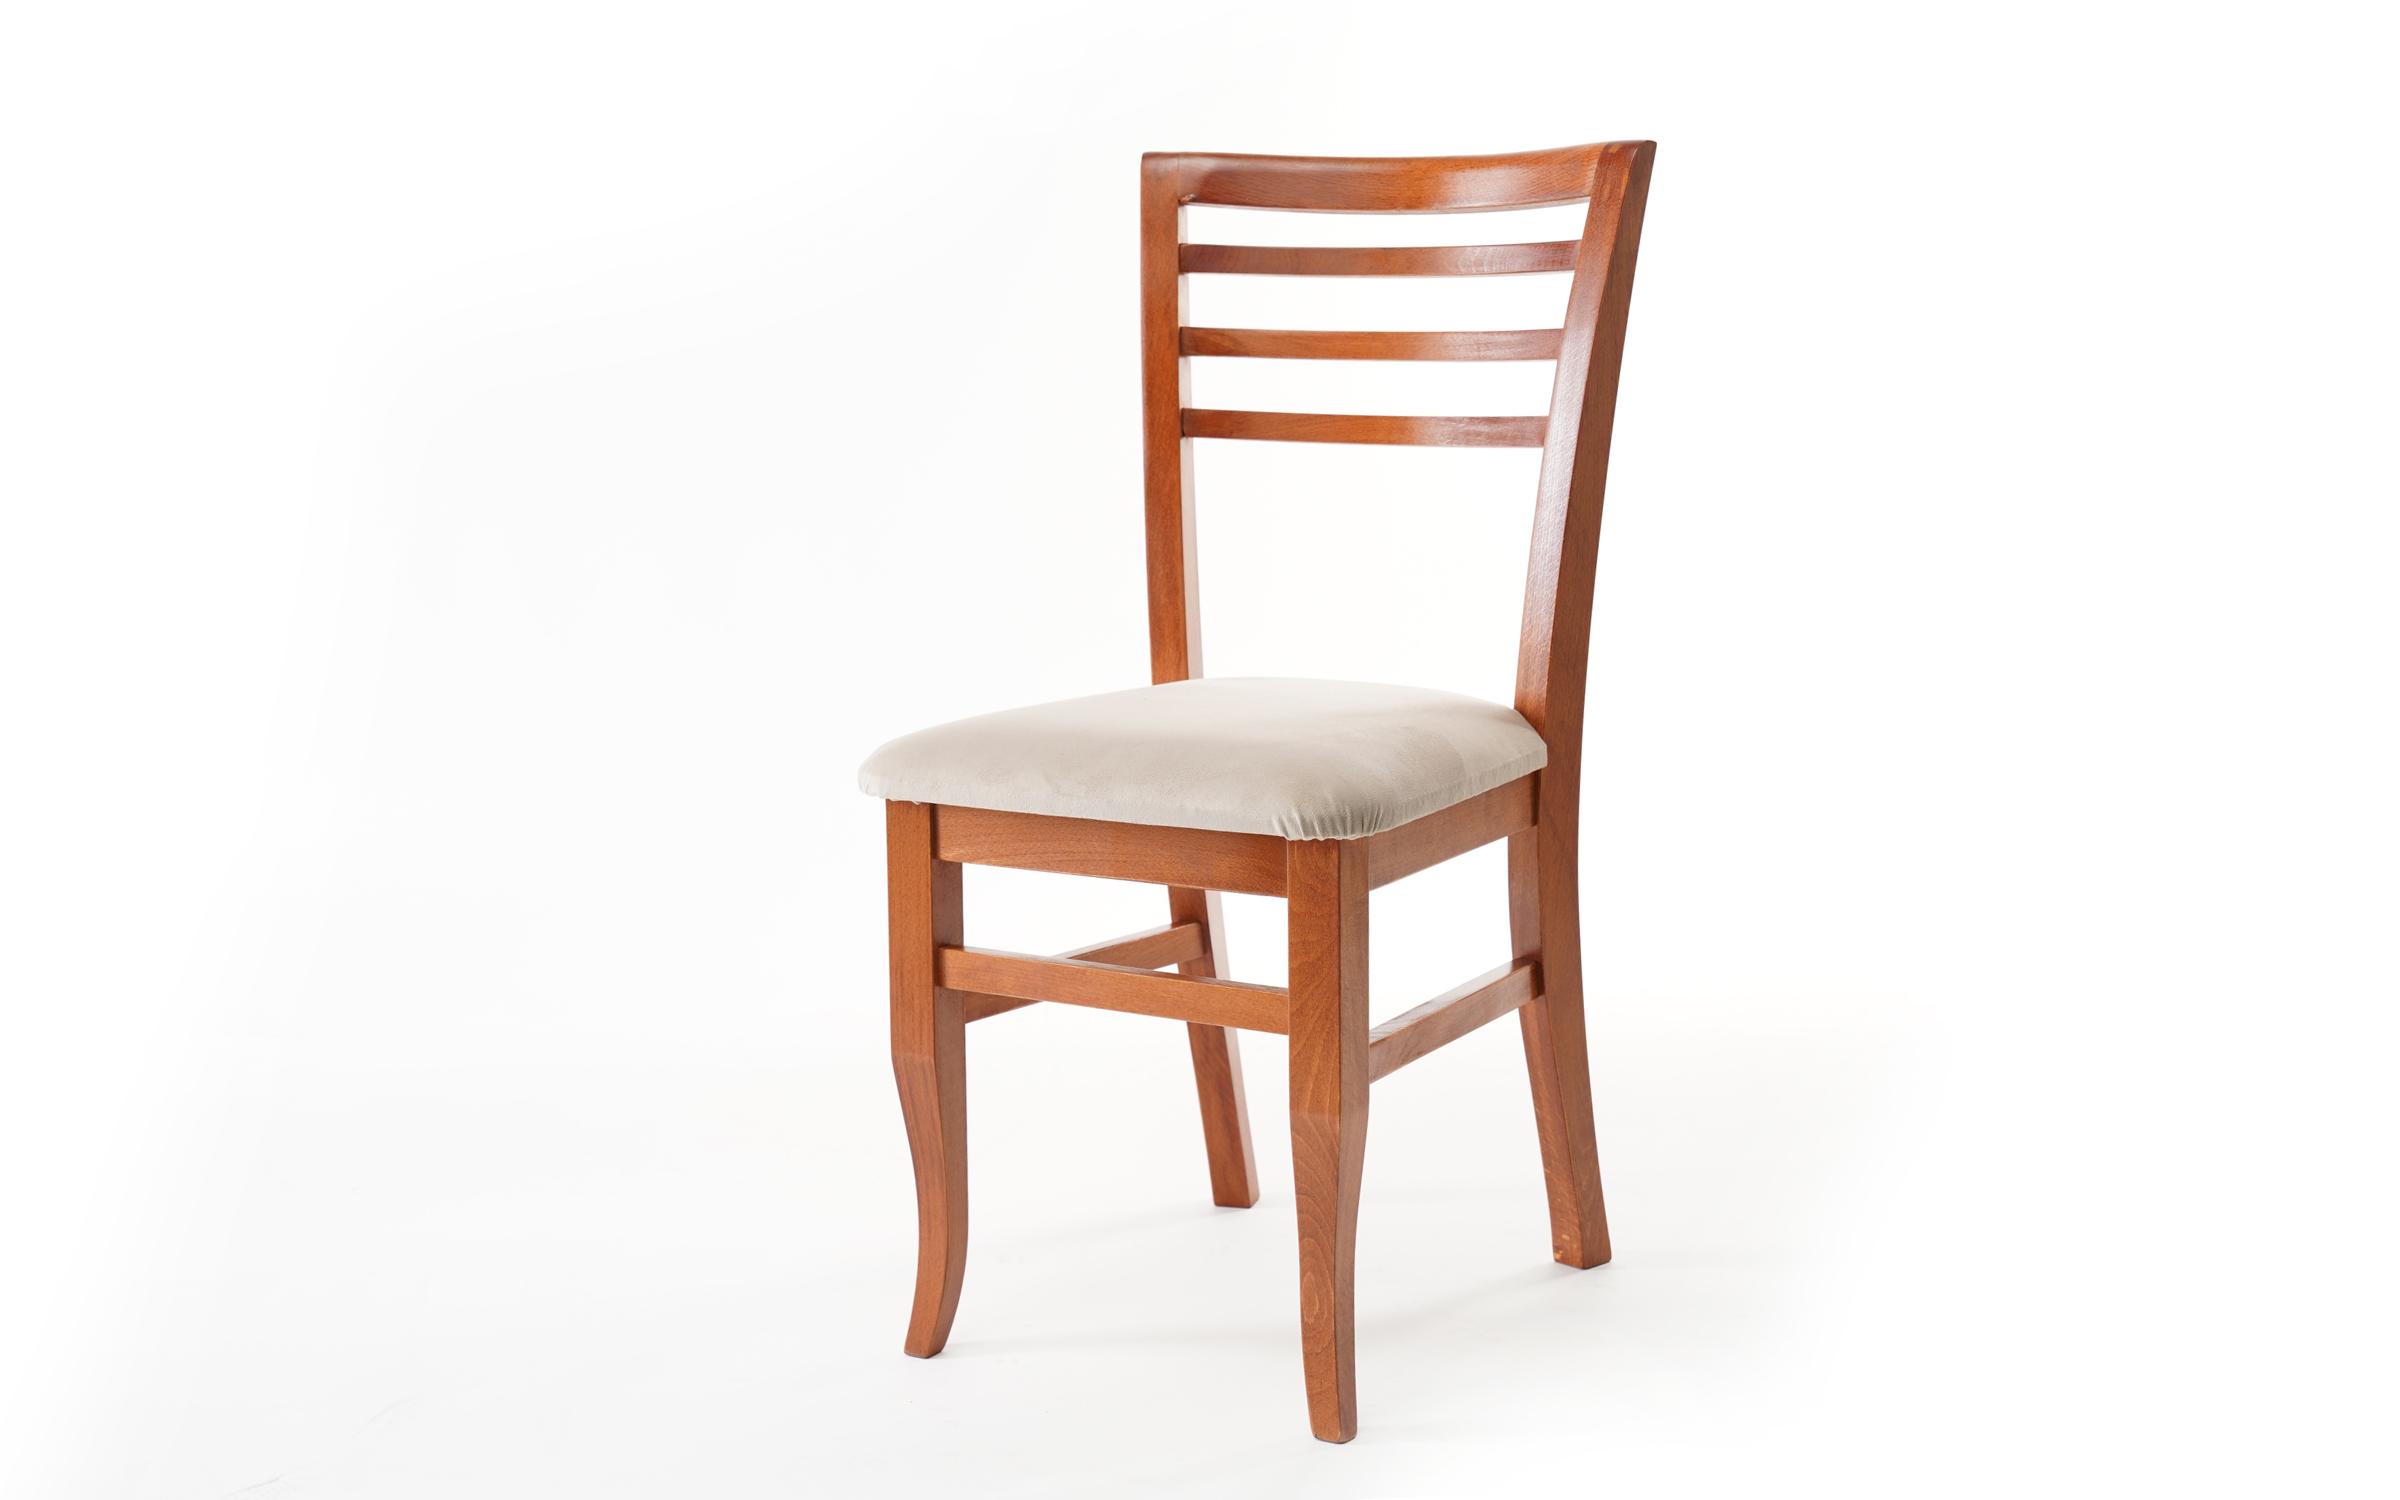 Kαρέκλα Karlot, κερασιά με μπεζ κάθισμα  1